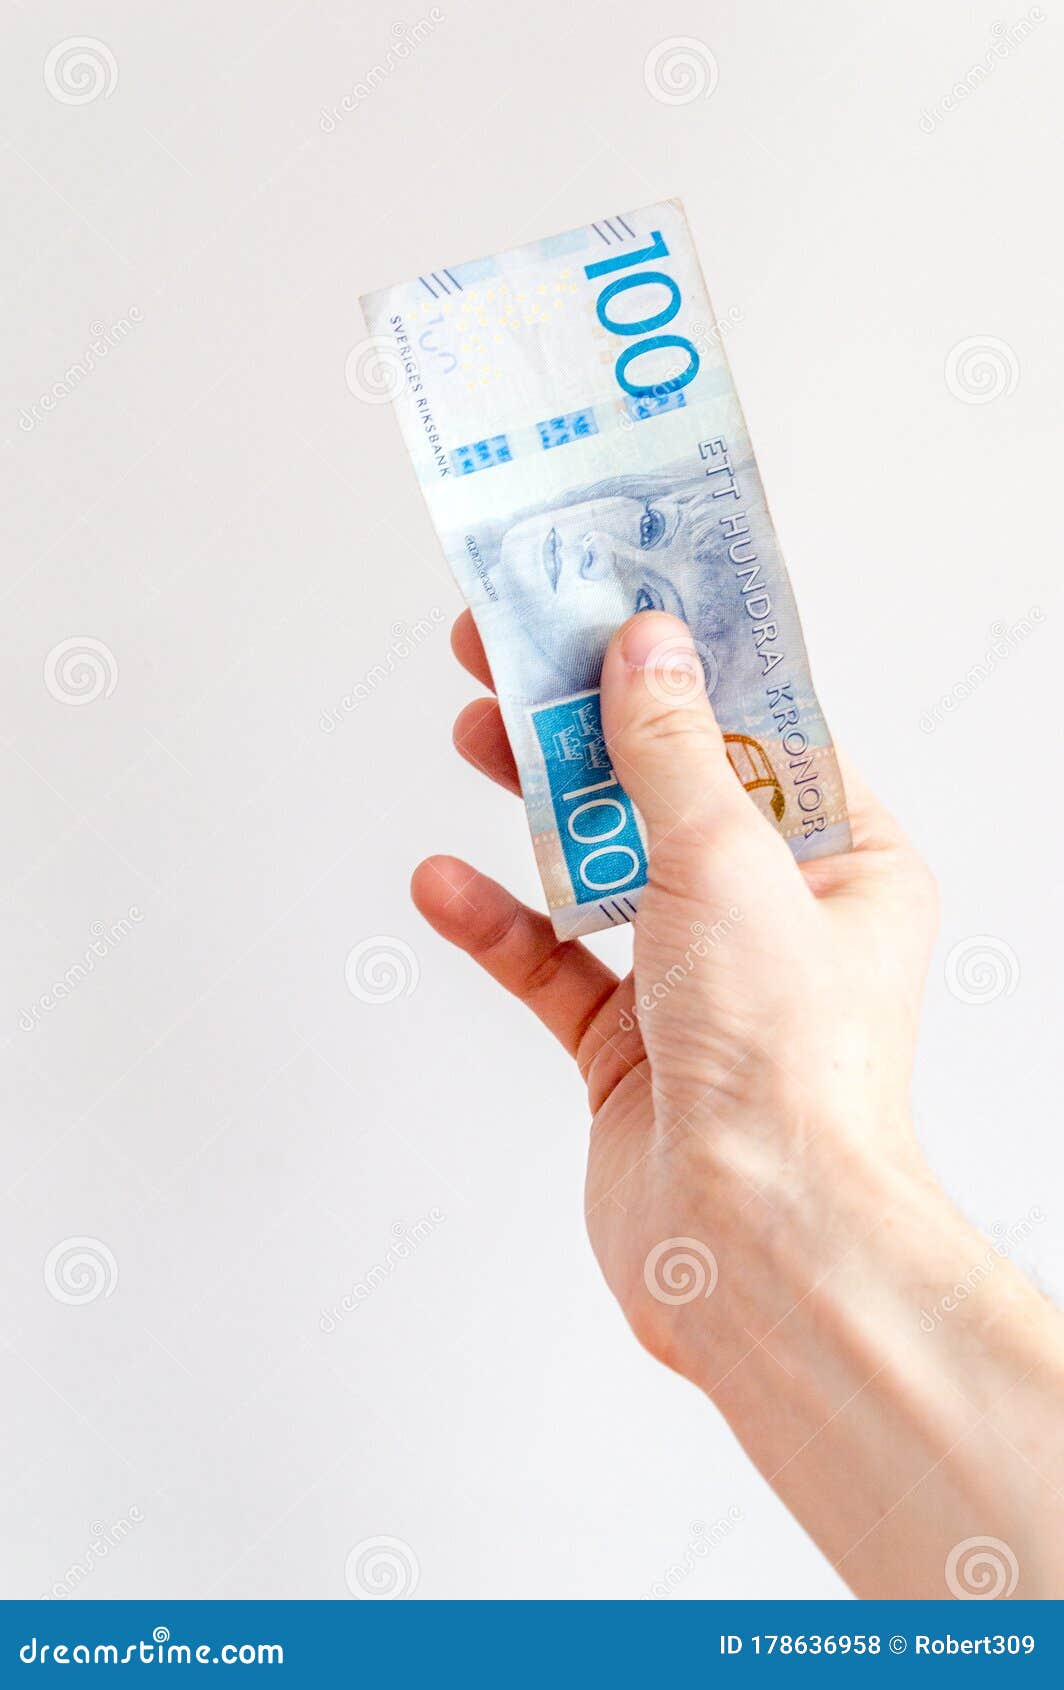 100 swedish krona banknote in hand. swedish bank note with portrait of greta garbo